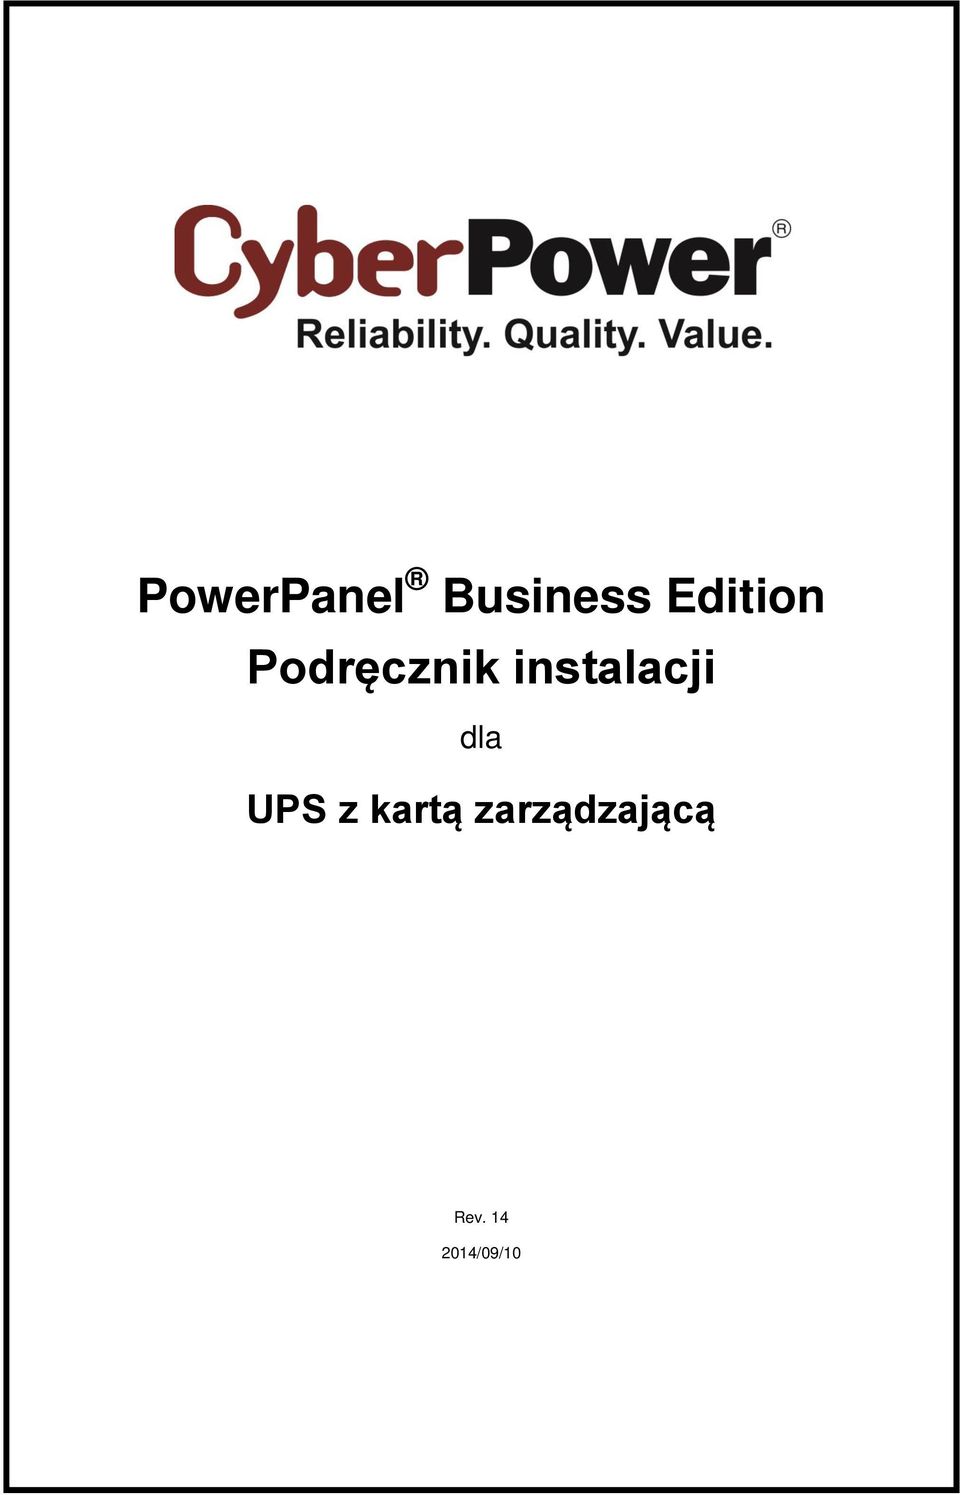 PowerPanel Business Edition UPS z kartą